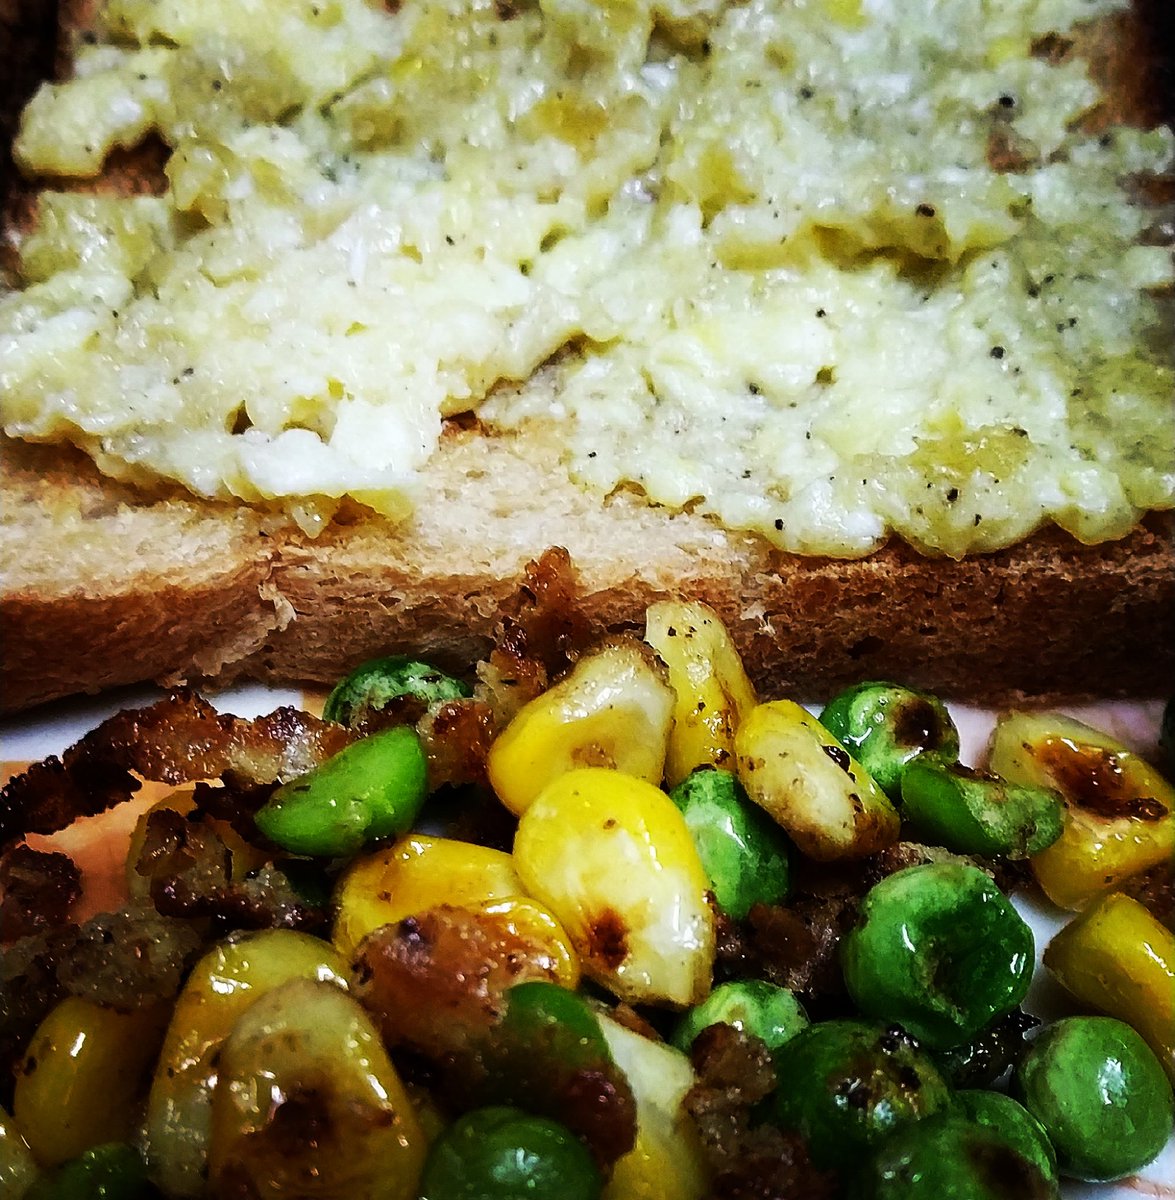 Sunday

Gordon Ramsay style garlic bread with scrambled eggs & roasted veggies

#breakfast 
#sunday 
#gordonramsay 
#whatscooking https://t.co/BRkhWsyJx2